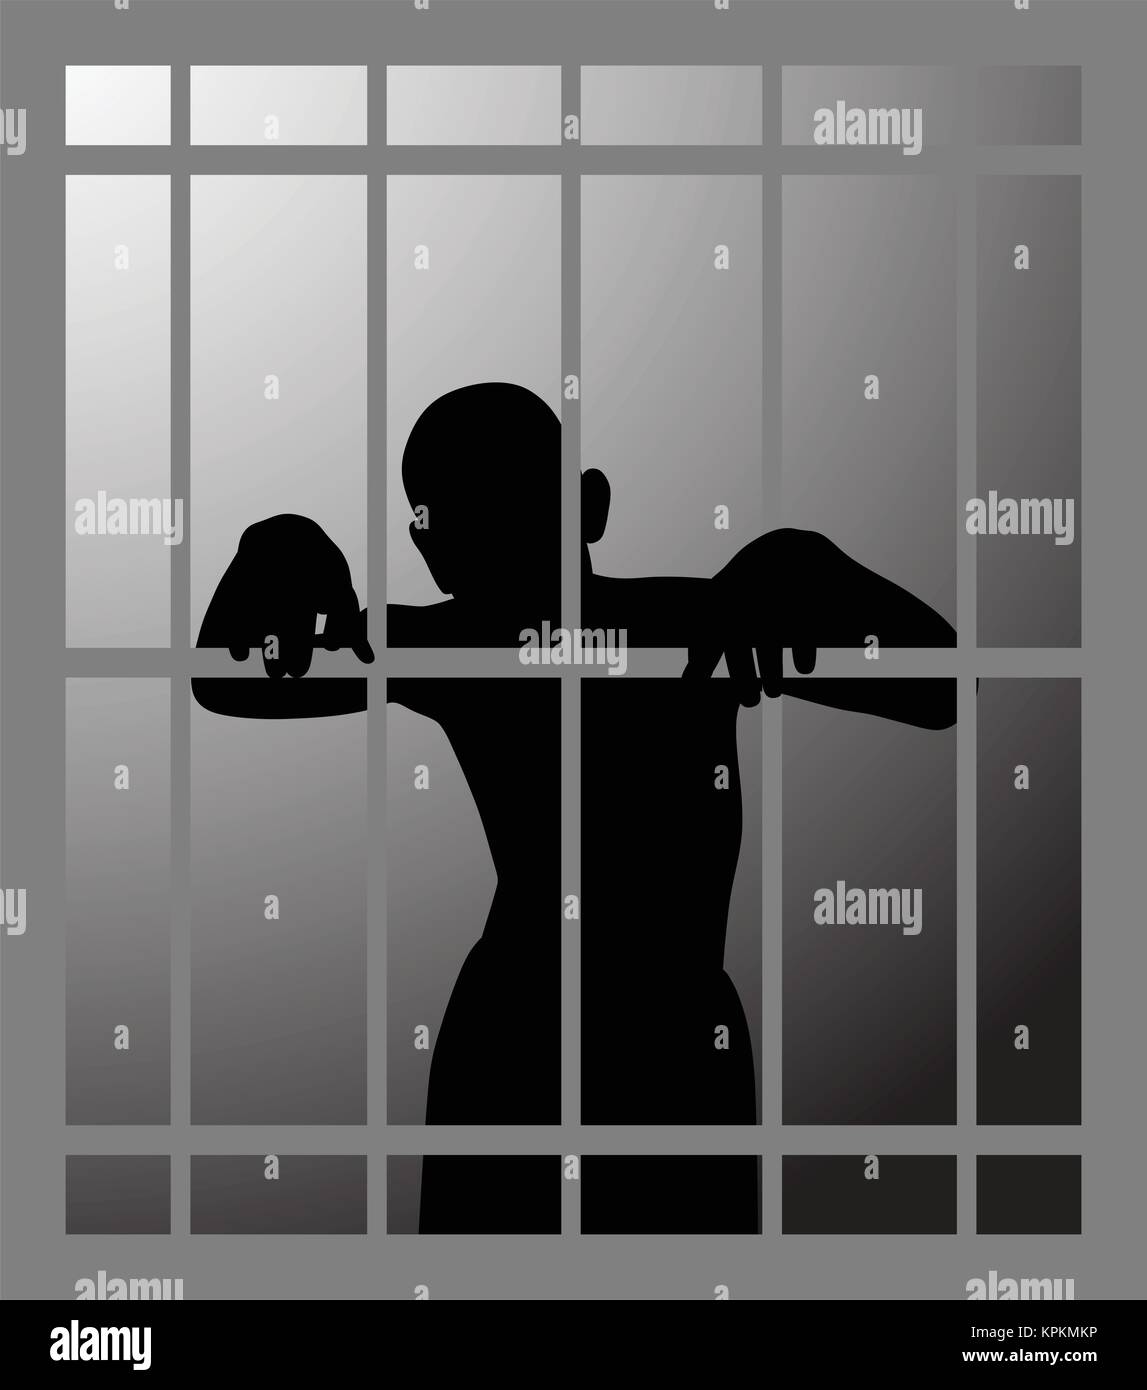 Man in prison or dark dungeon behind bars Stock Vector